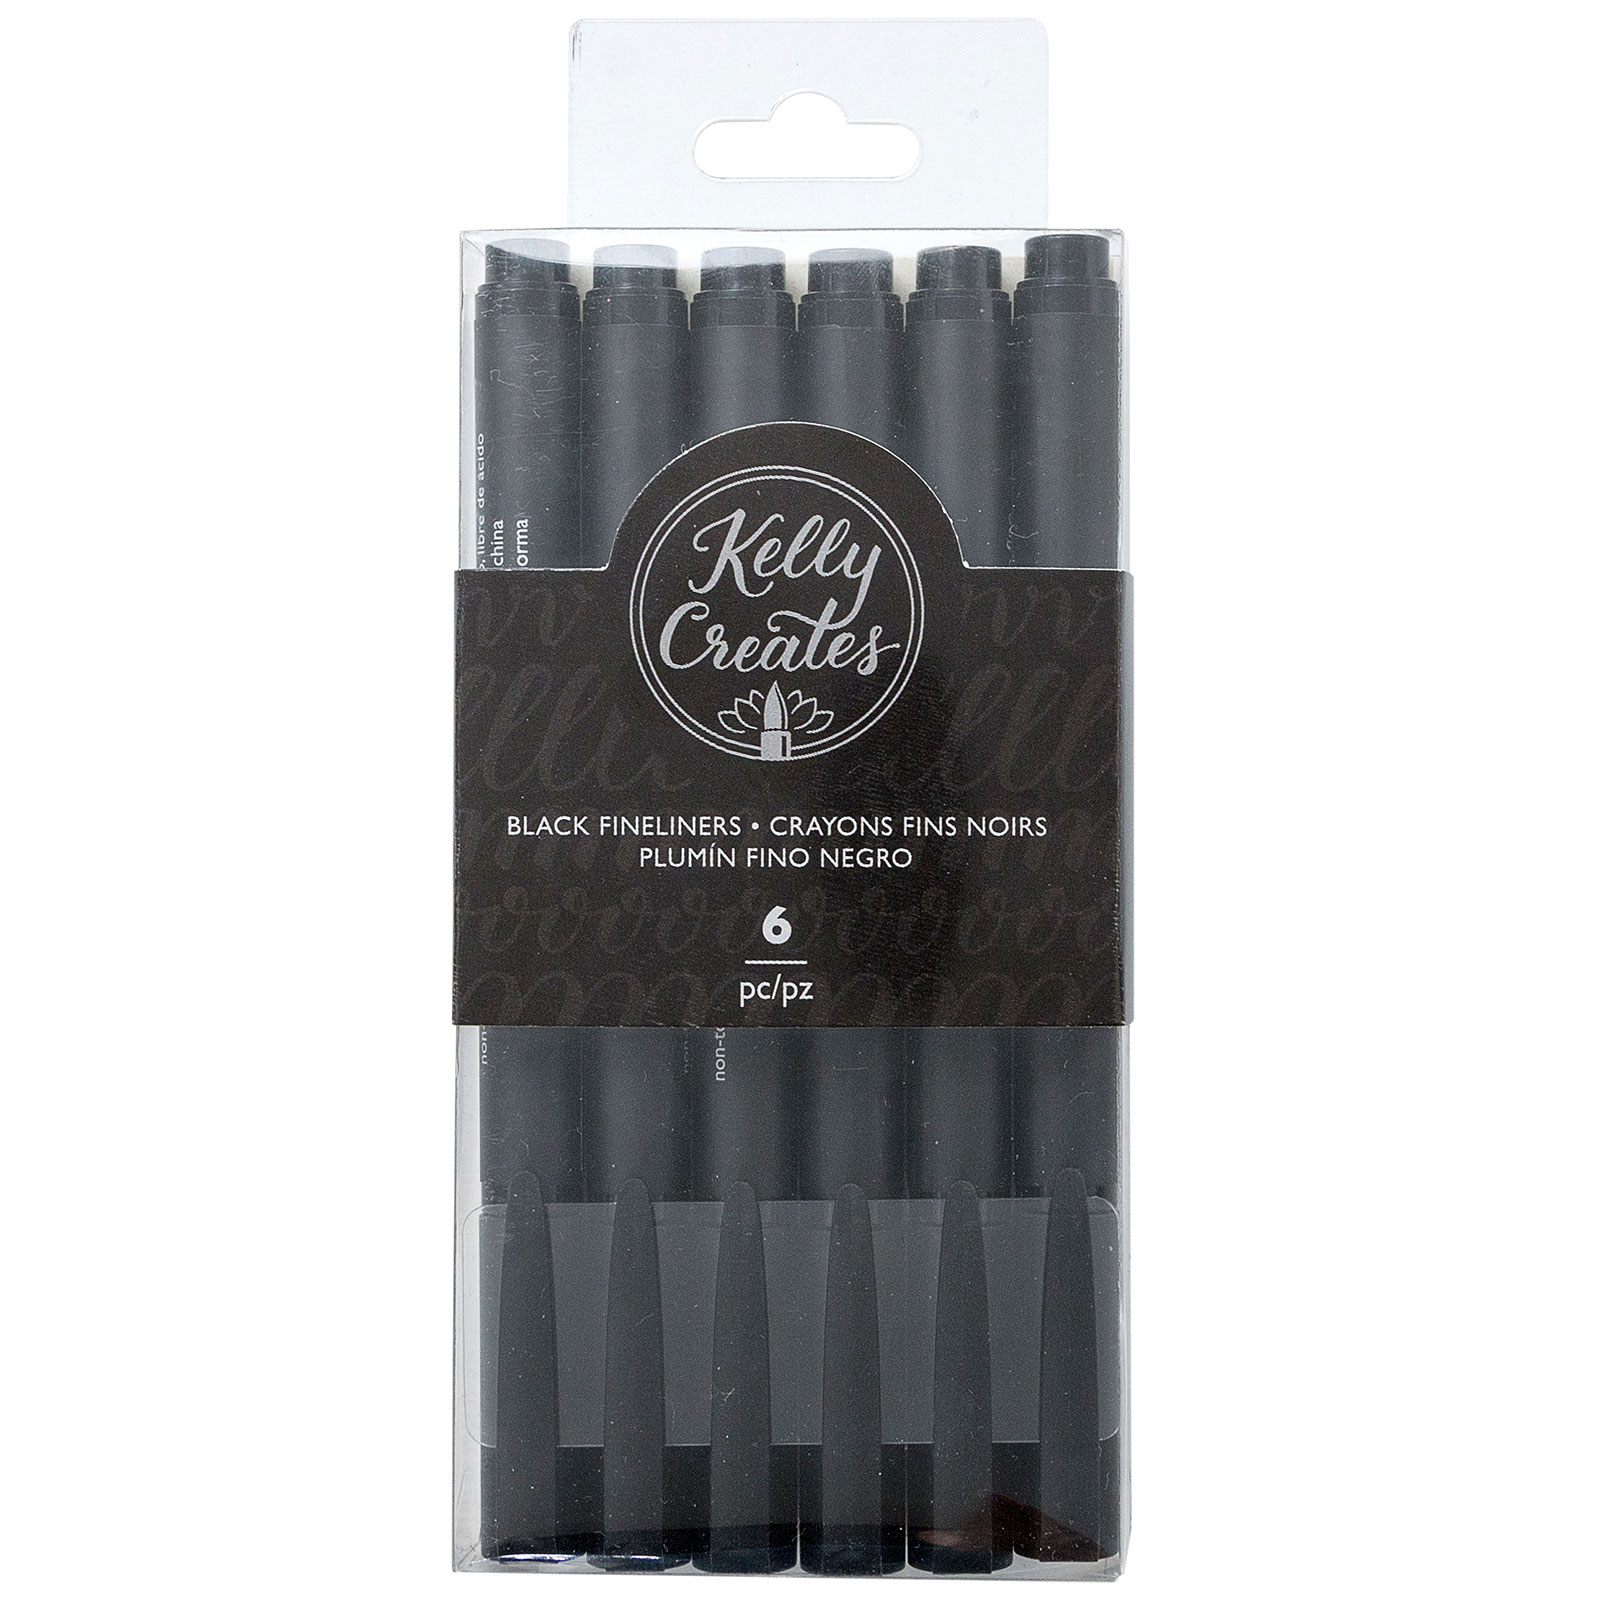 American Crafts Kelly Creates Black Fineliner Pens